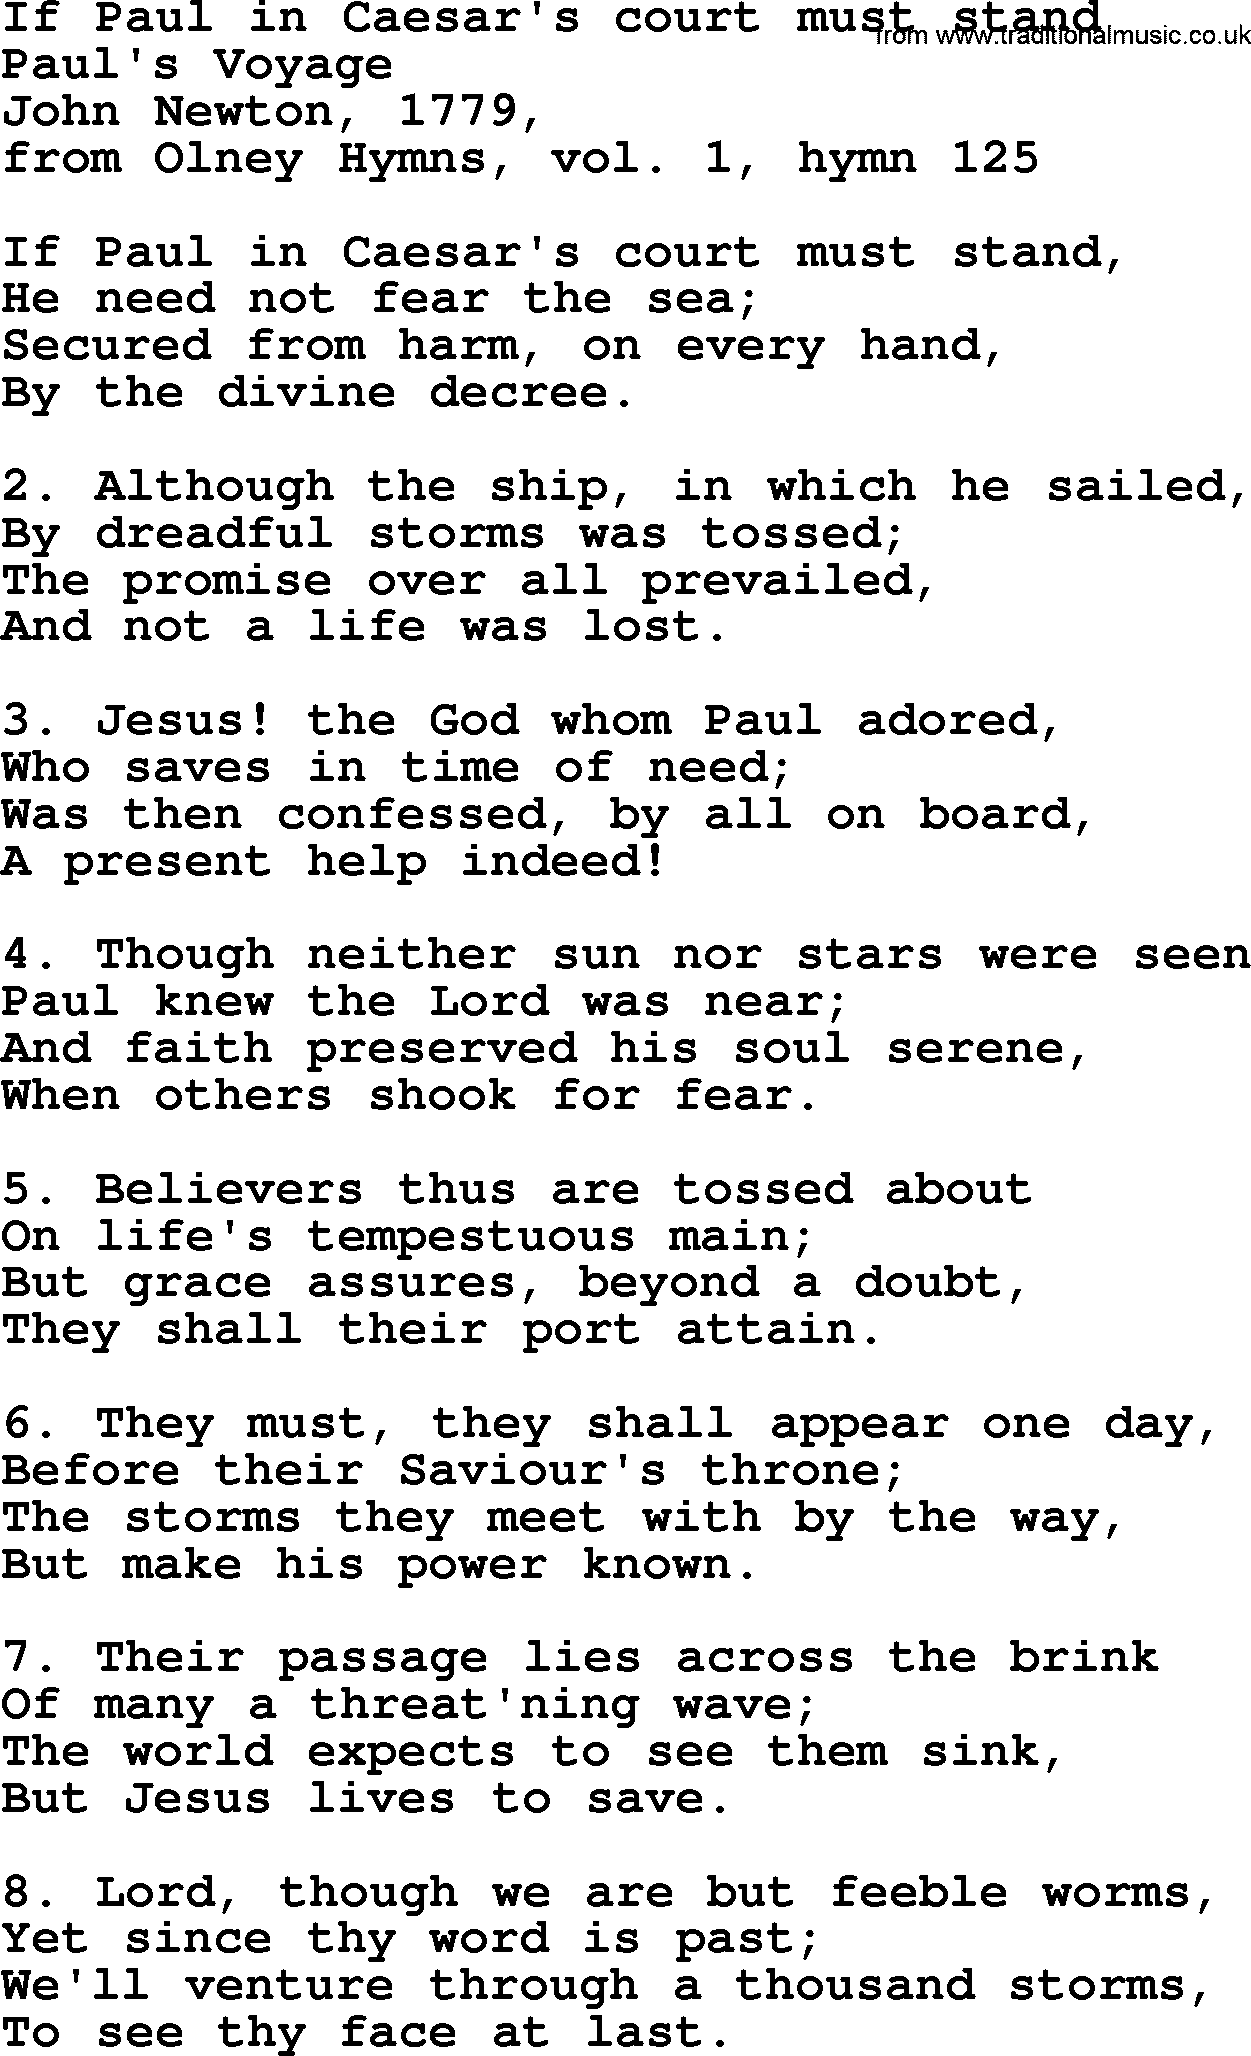 John Newton hymn: If Paul In Caesar's Court Must Stand, lyrics